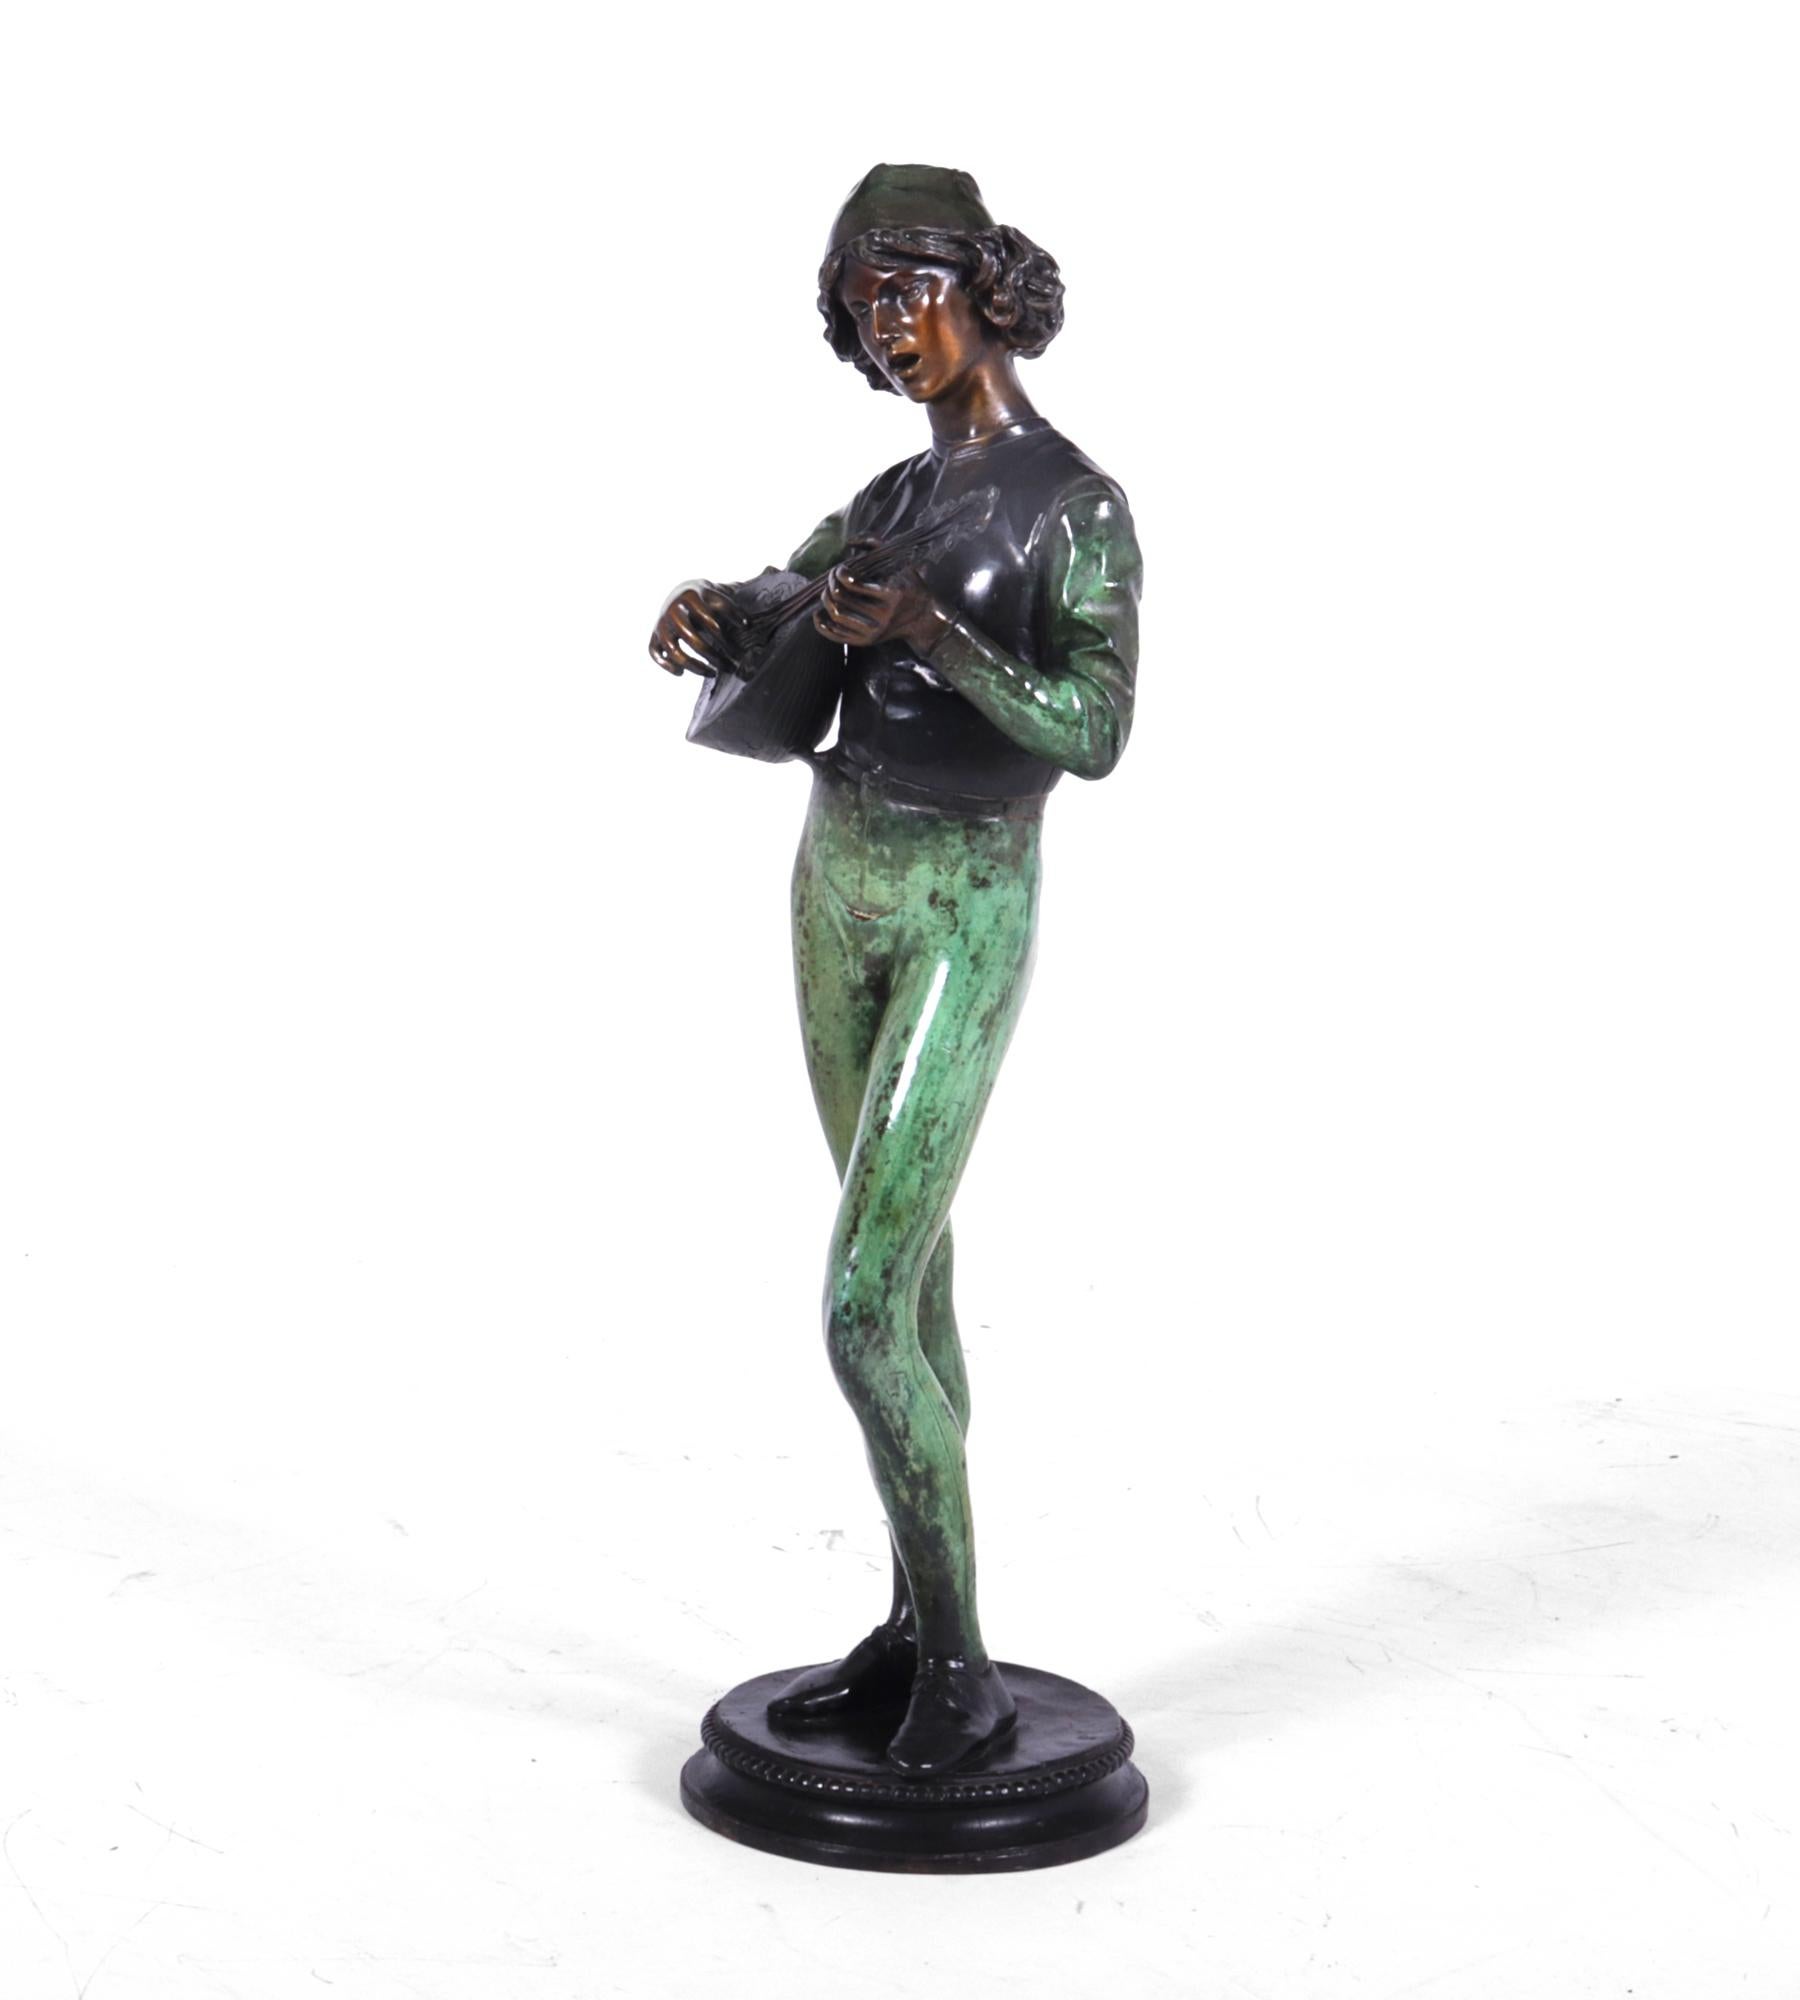 Late 19th Century Antique Bronze Sculpture ‘Standing Music Man’ by Barbedienne Fondeur c1880